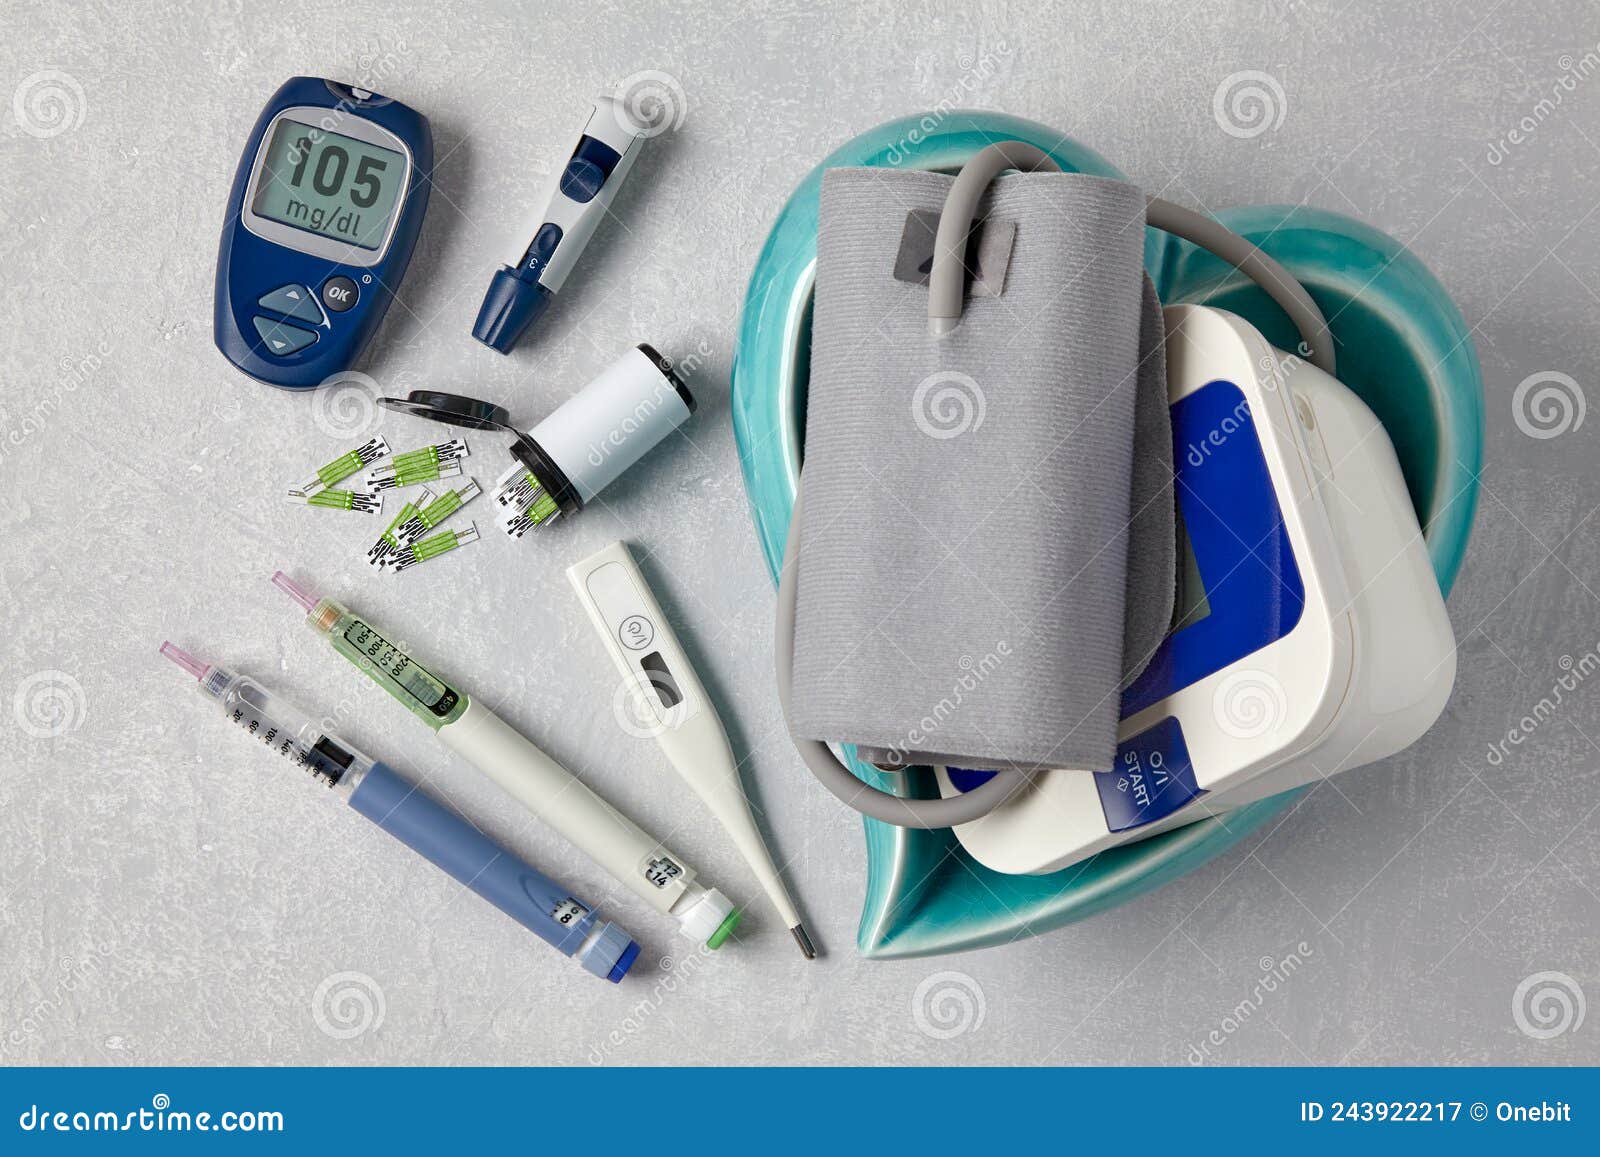 https://thumbs.dreamstime.com/z/glucose-blood-meter-insulin-pen-syringes-blood-pressure-monitor-glucose-blood-meter-insulin-pen-syringes-thermometer-blood-243922217.jpg